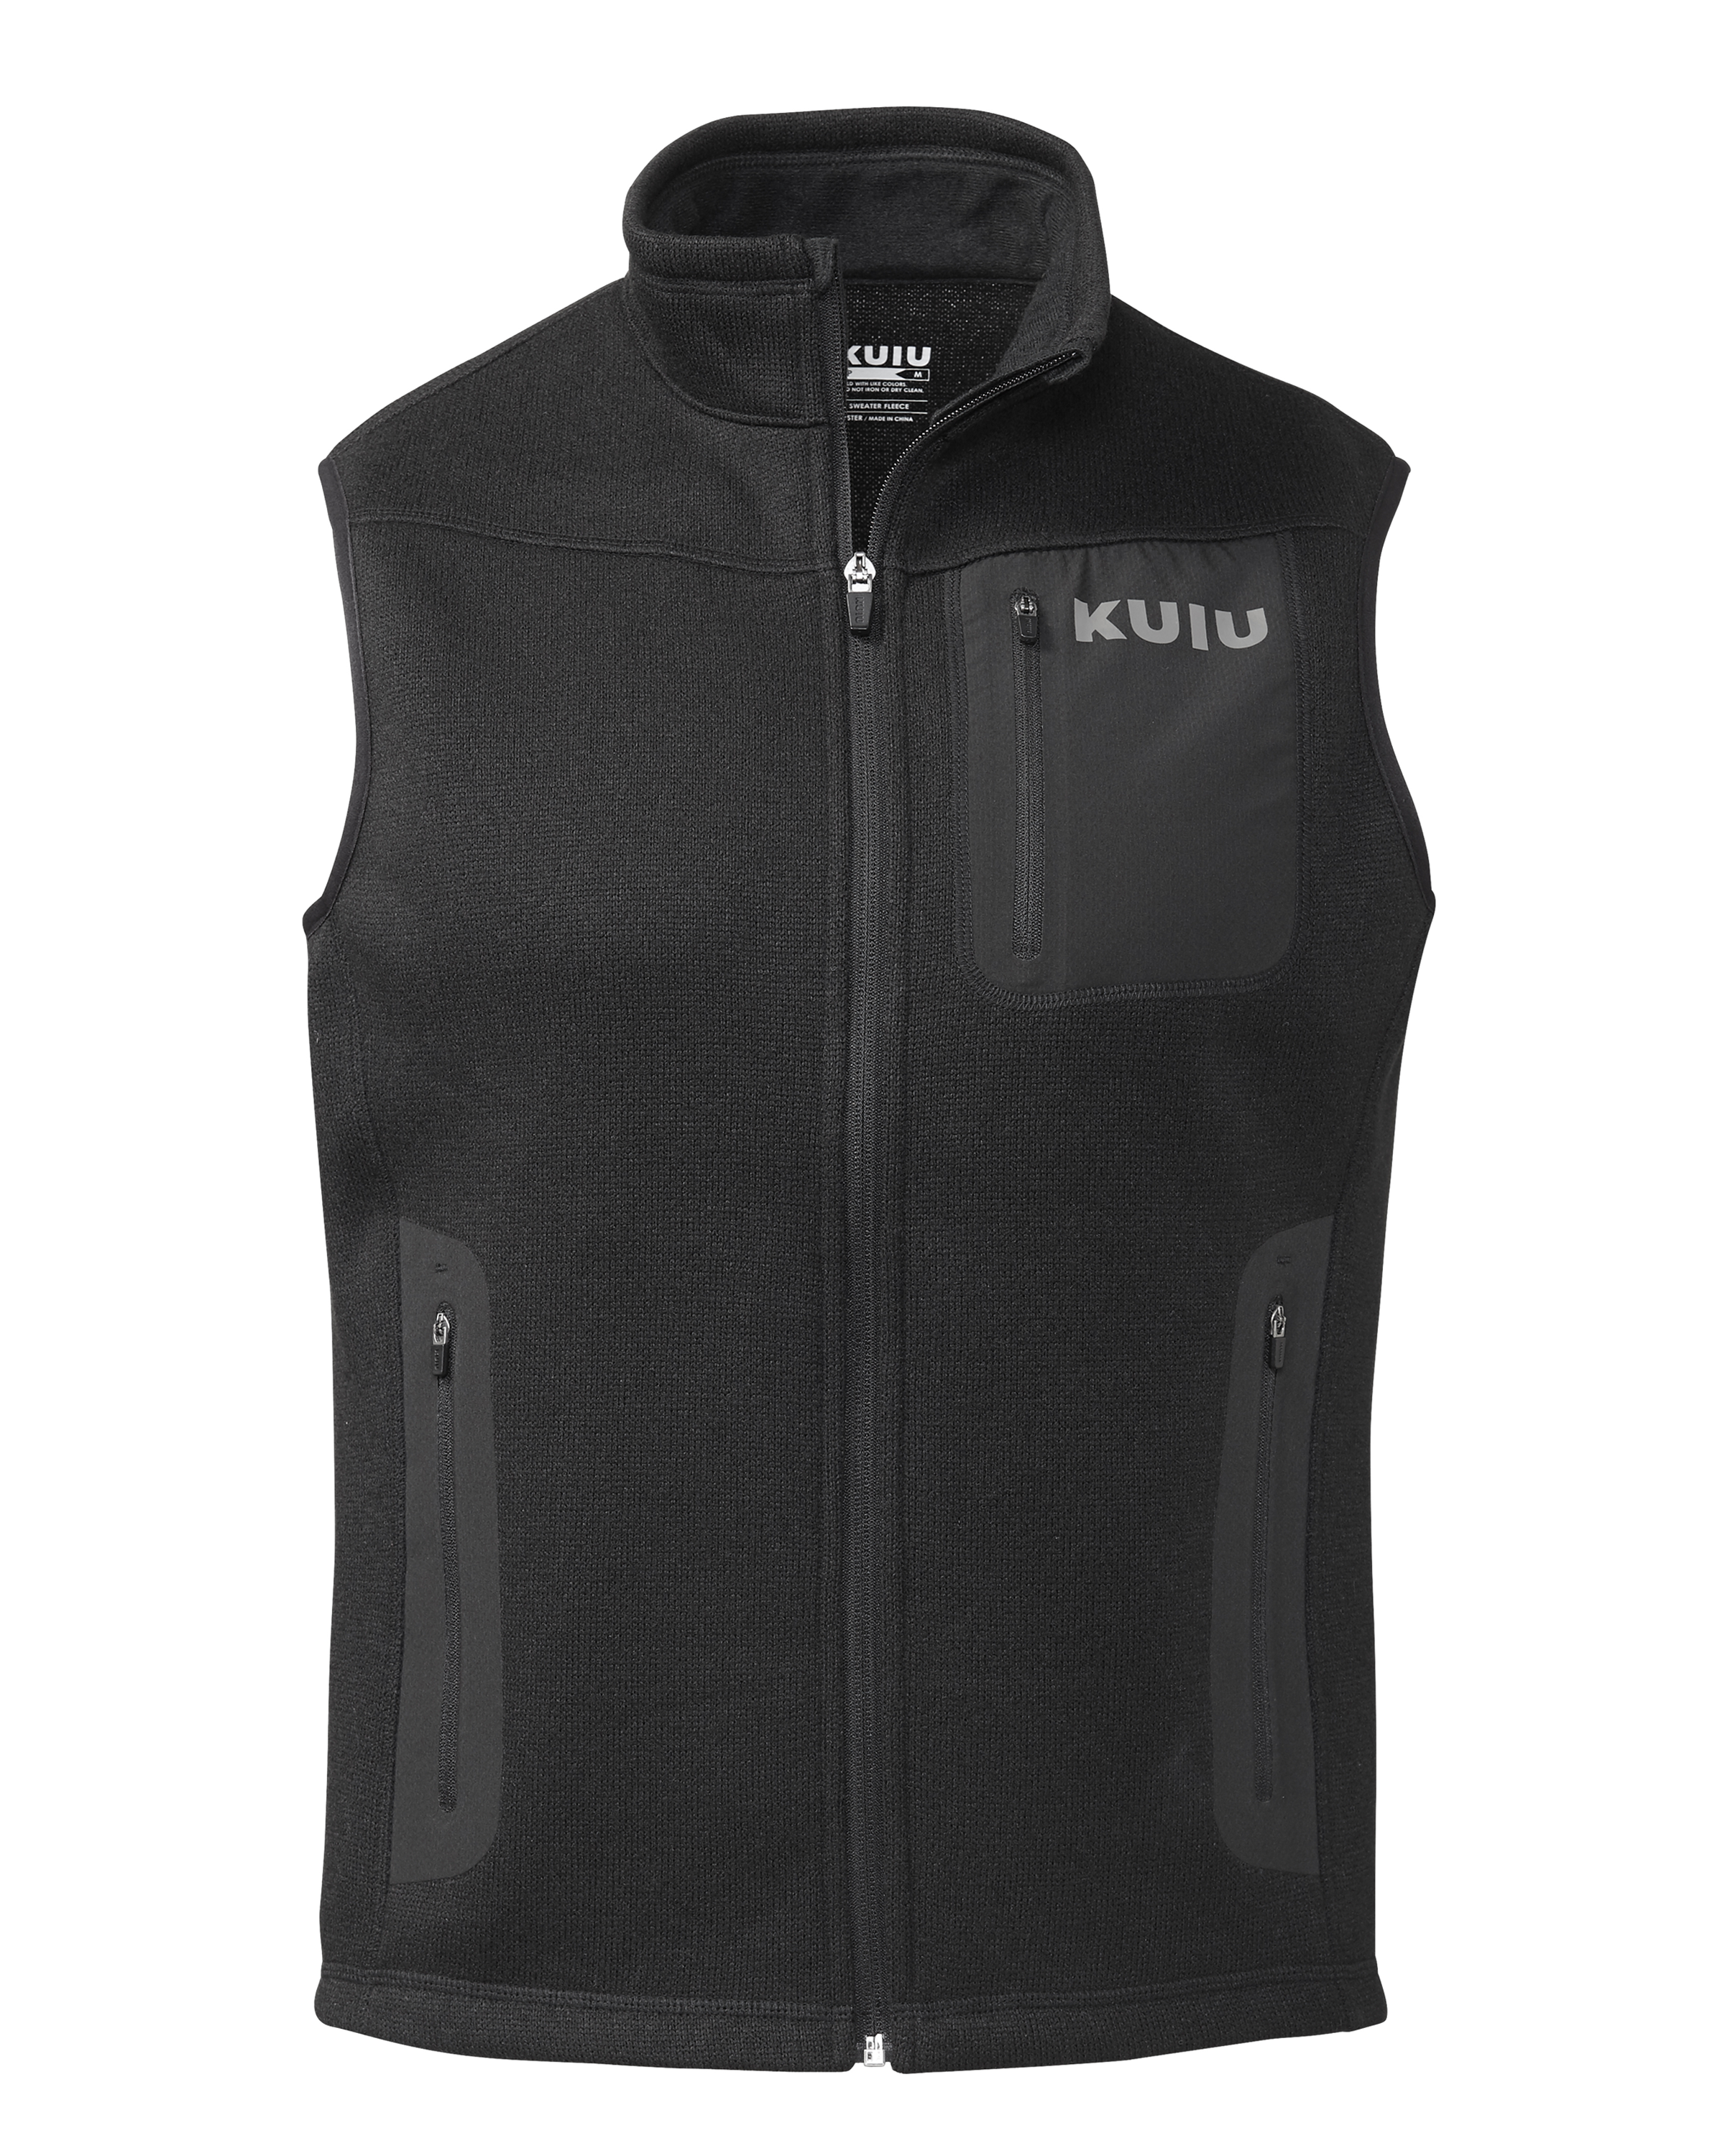 KUIU Base Camp Sweater Vest in Black | Large